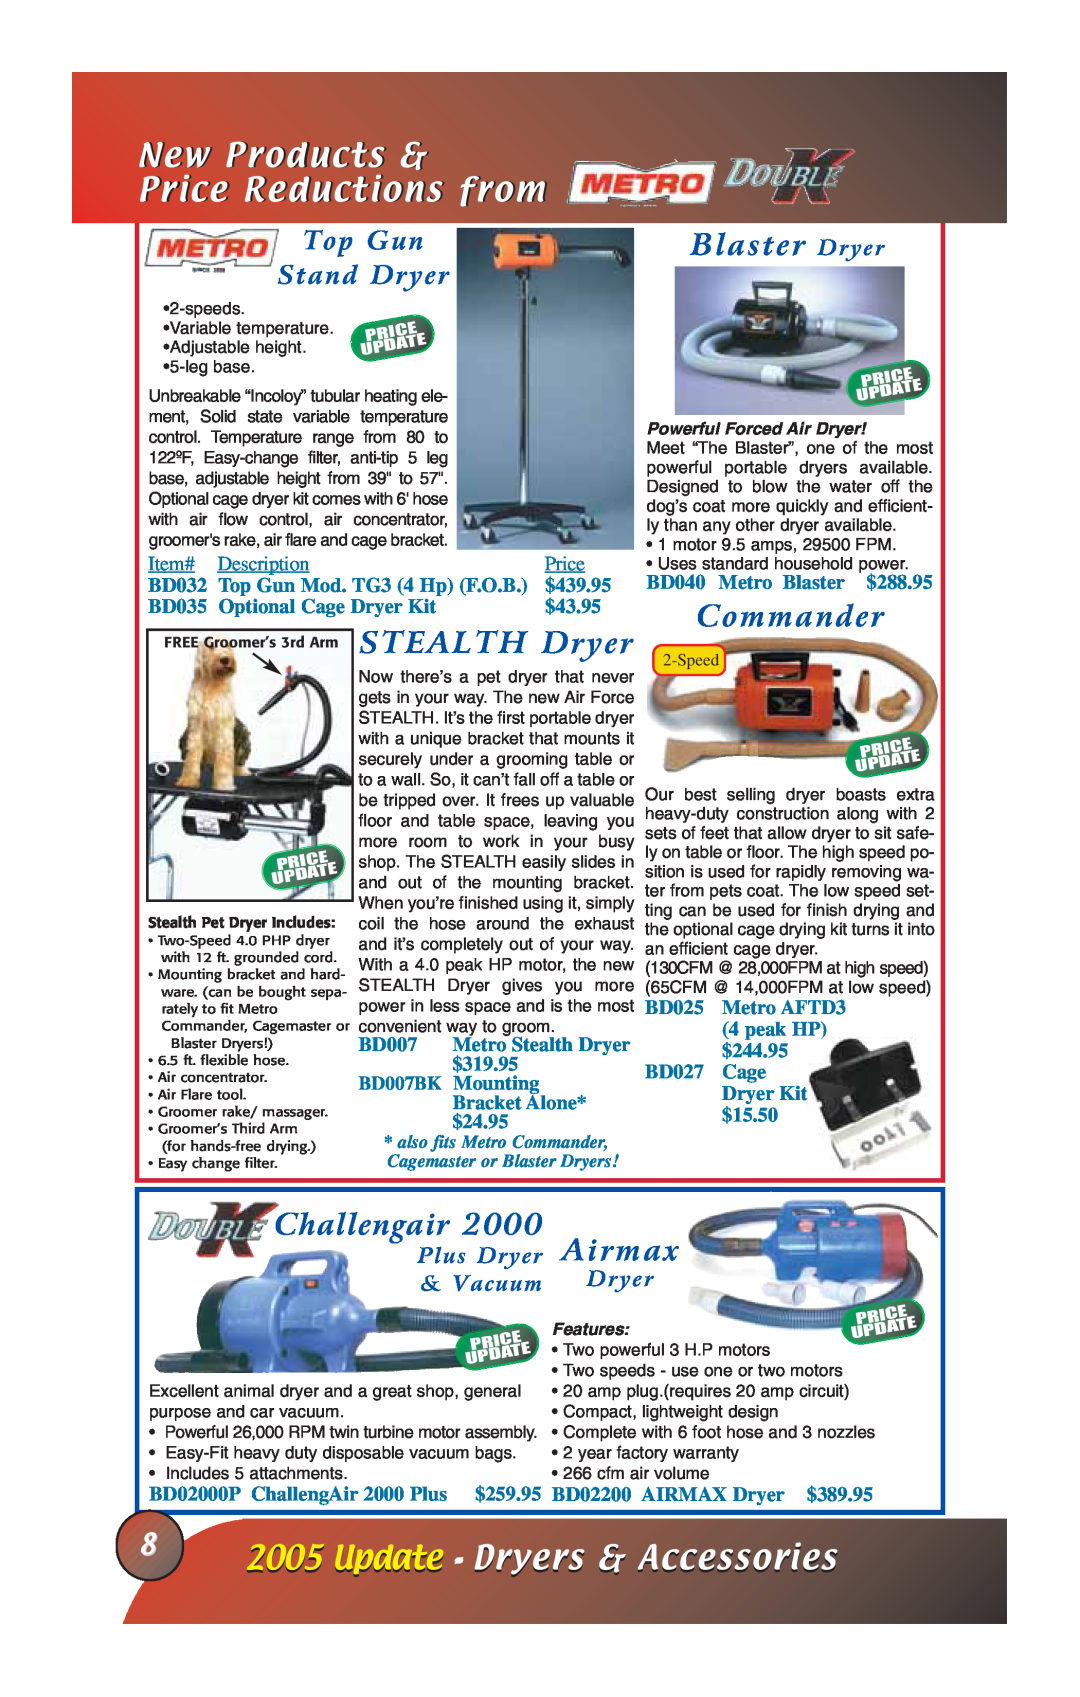 Petsafe EC216 Blaster Dryer, Commander, STEALTH Dryer, Update - Dryers & Accessories, Top Gun, Stand Dryer, Item#, Price 